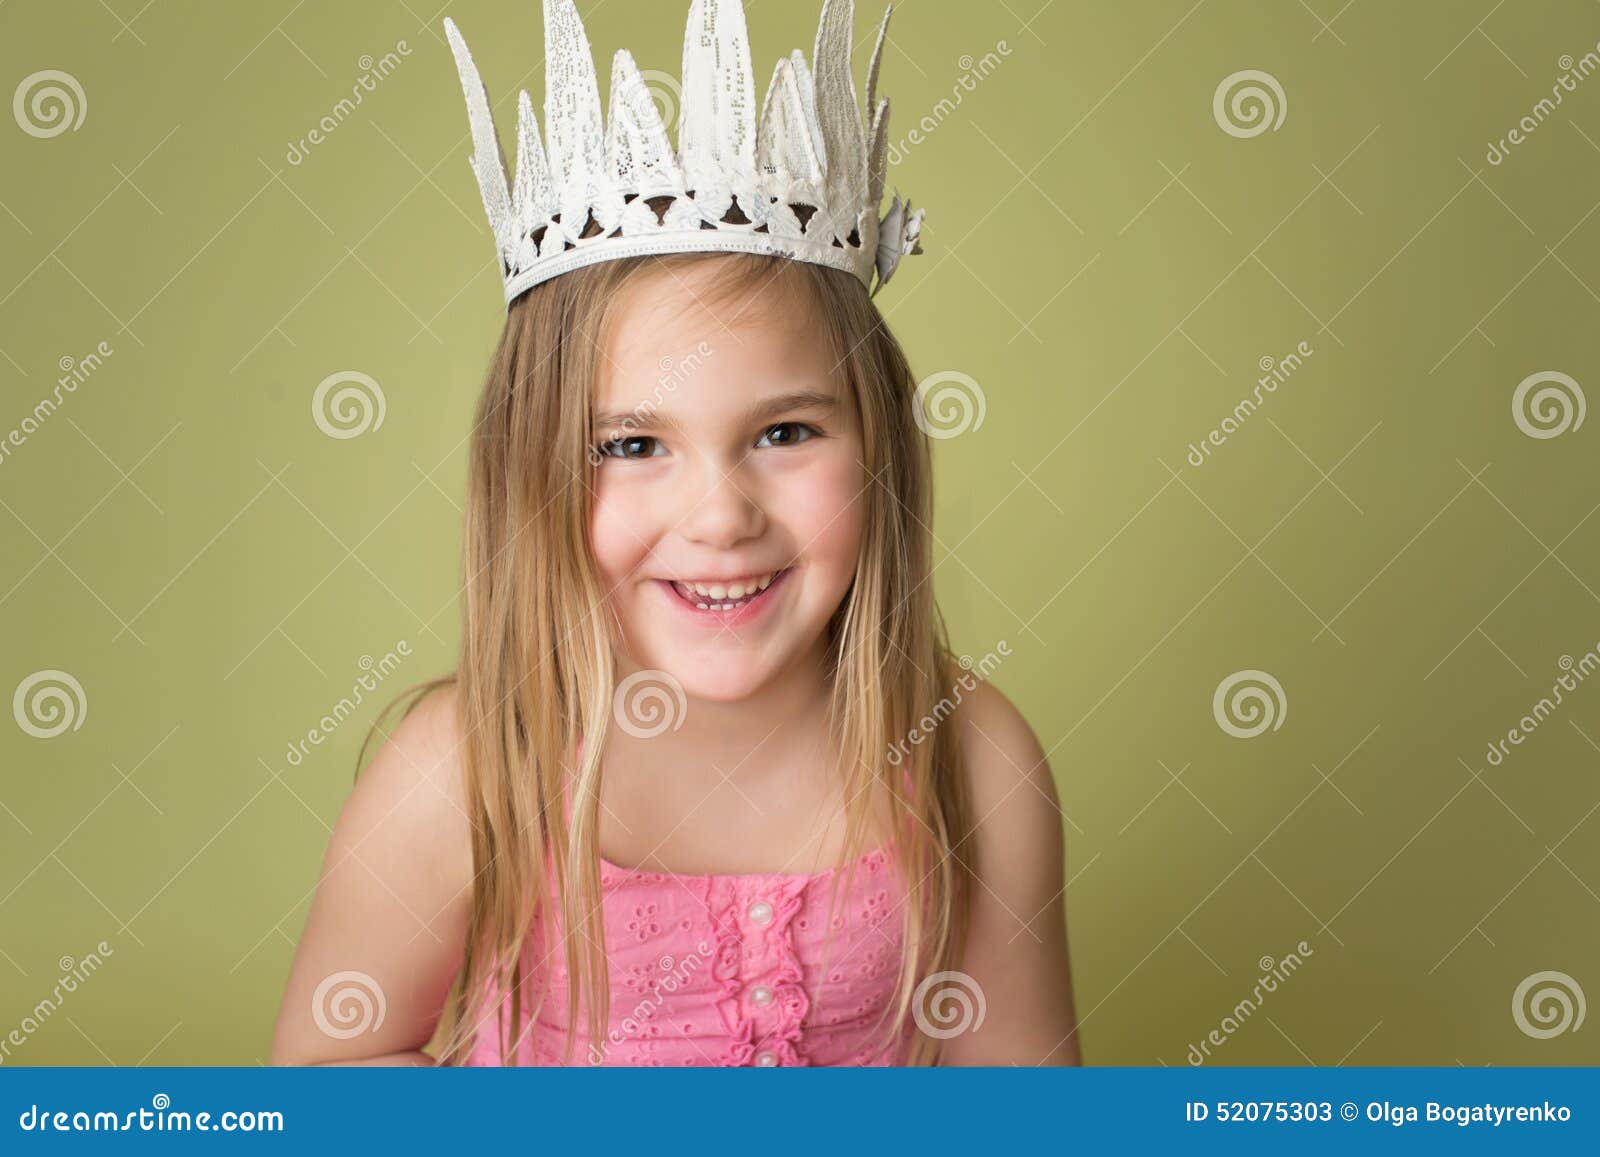 Girl in Crown, Princess stock image. Image of beautiful - 52075303